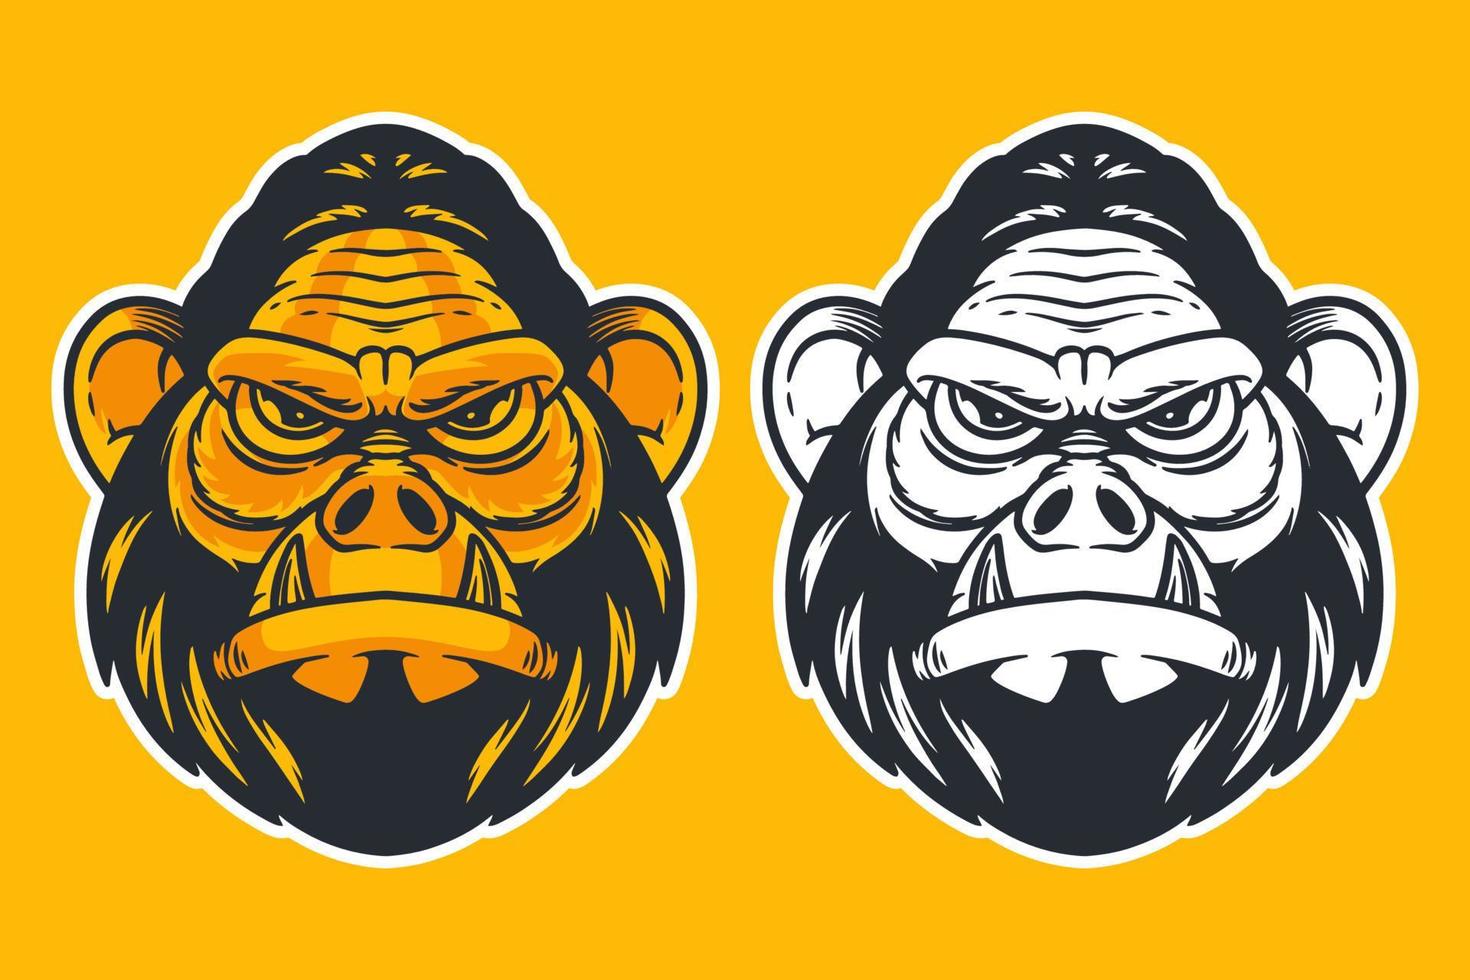 tête de gorille mascotte vector illustration cartoon style